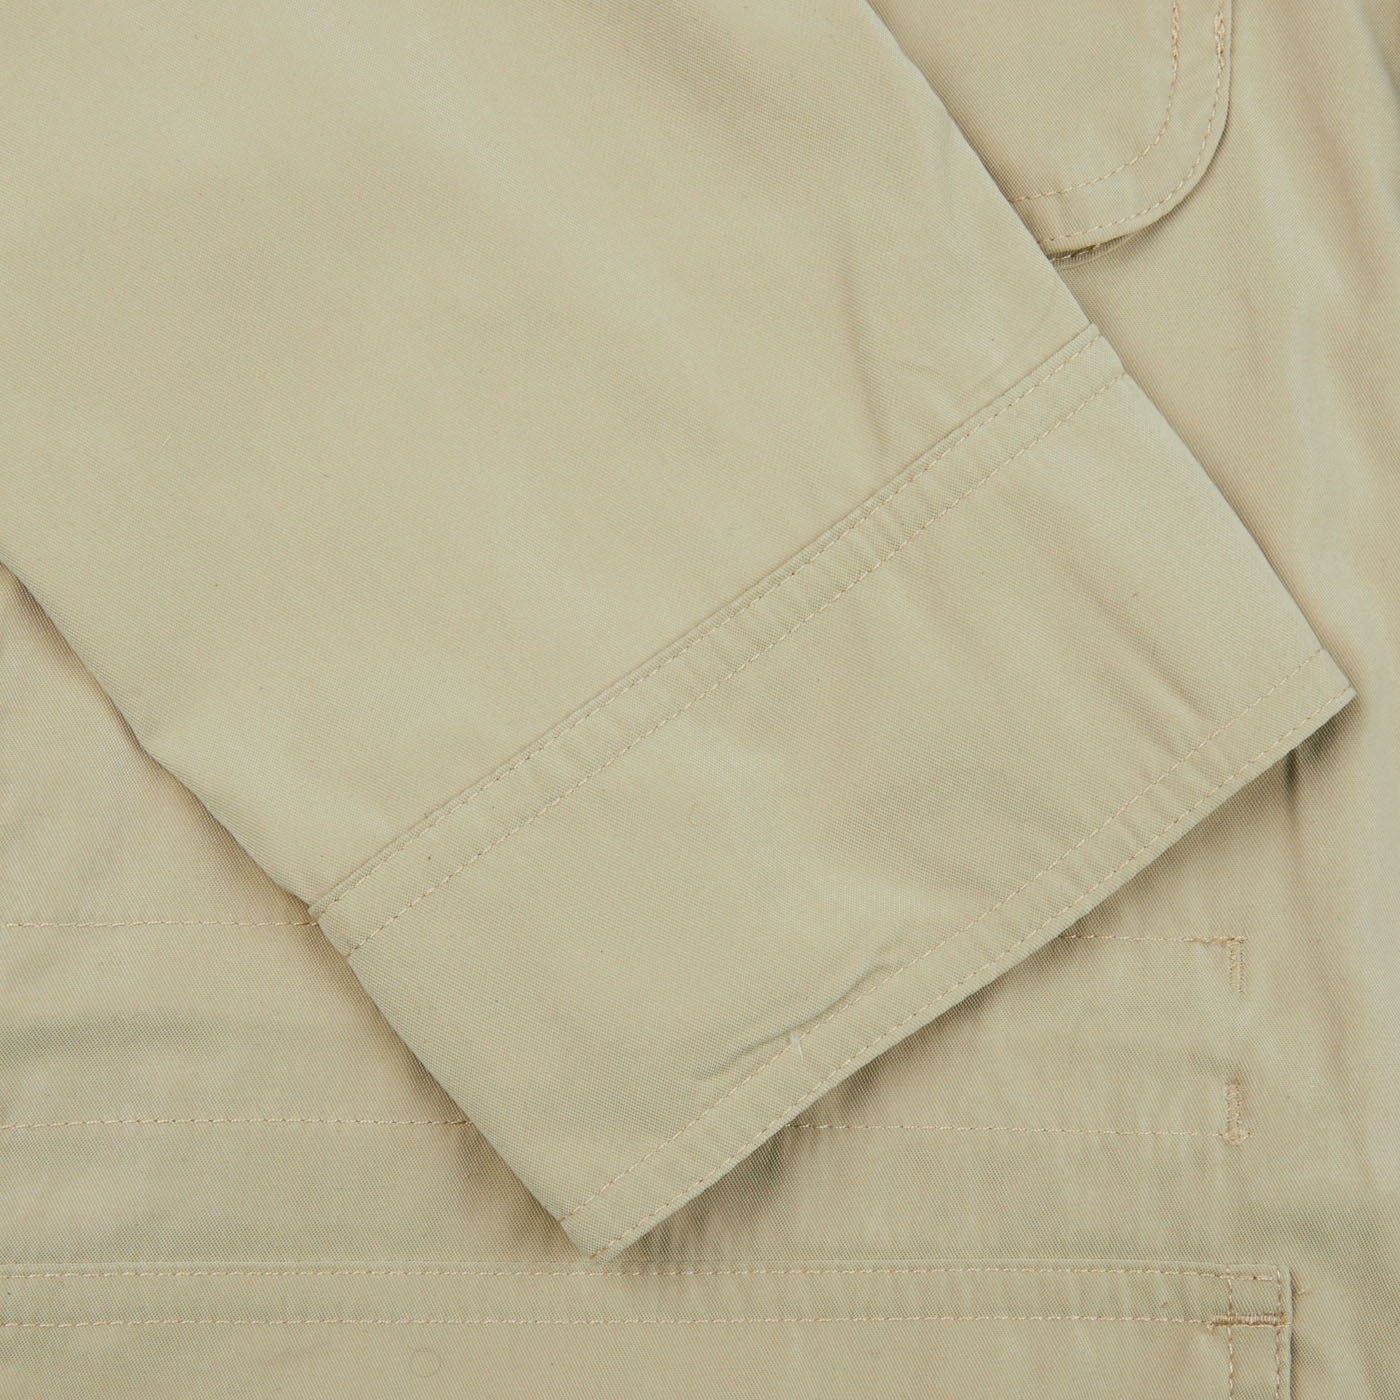 A close up image of a Manto Khaki Beige Ultrafine Microfiber Safari Jacket, slim fit.